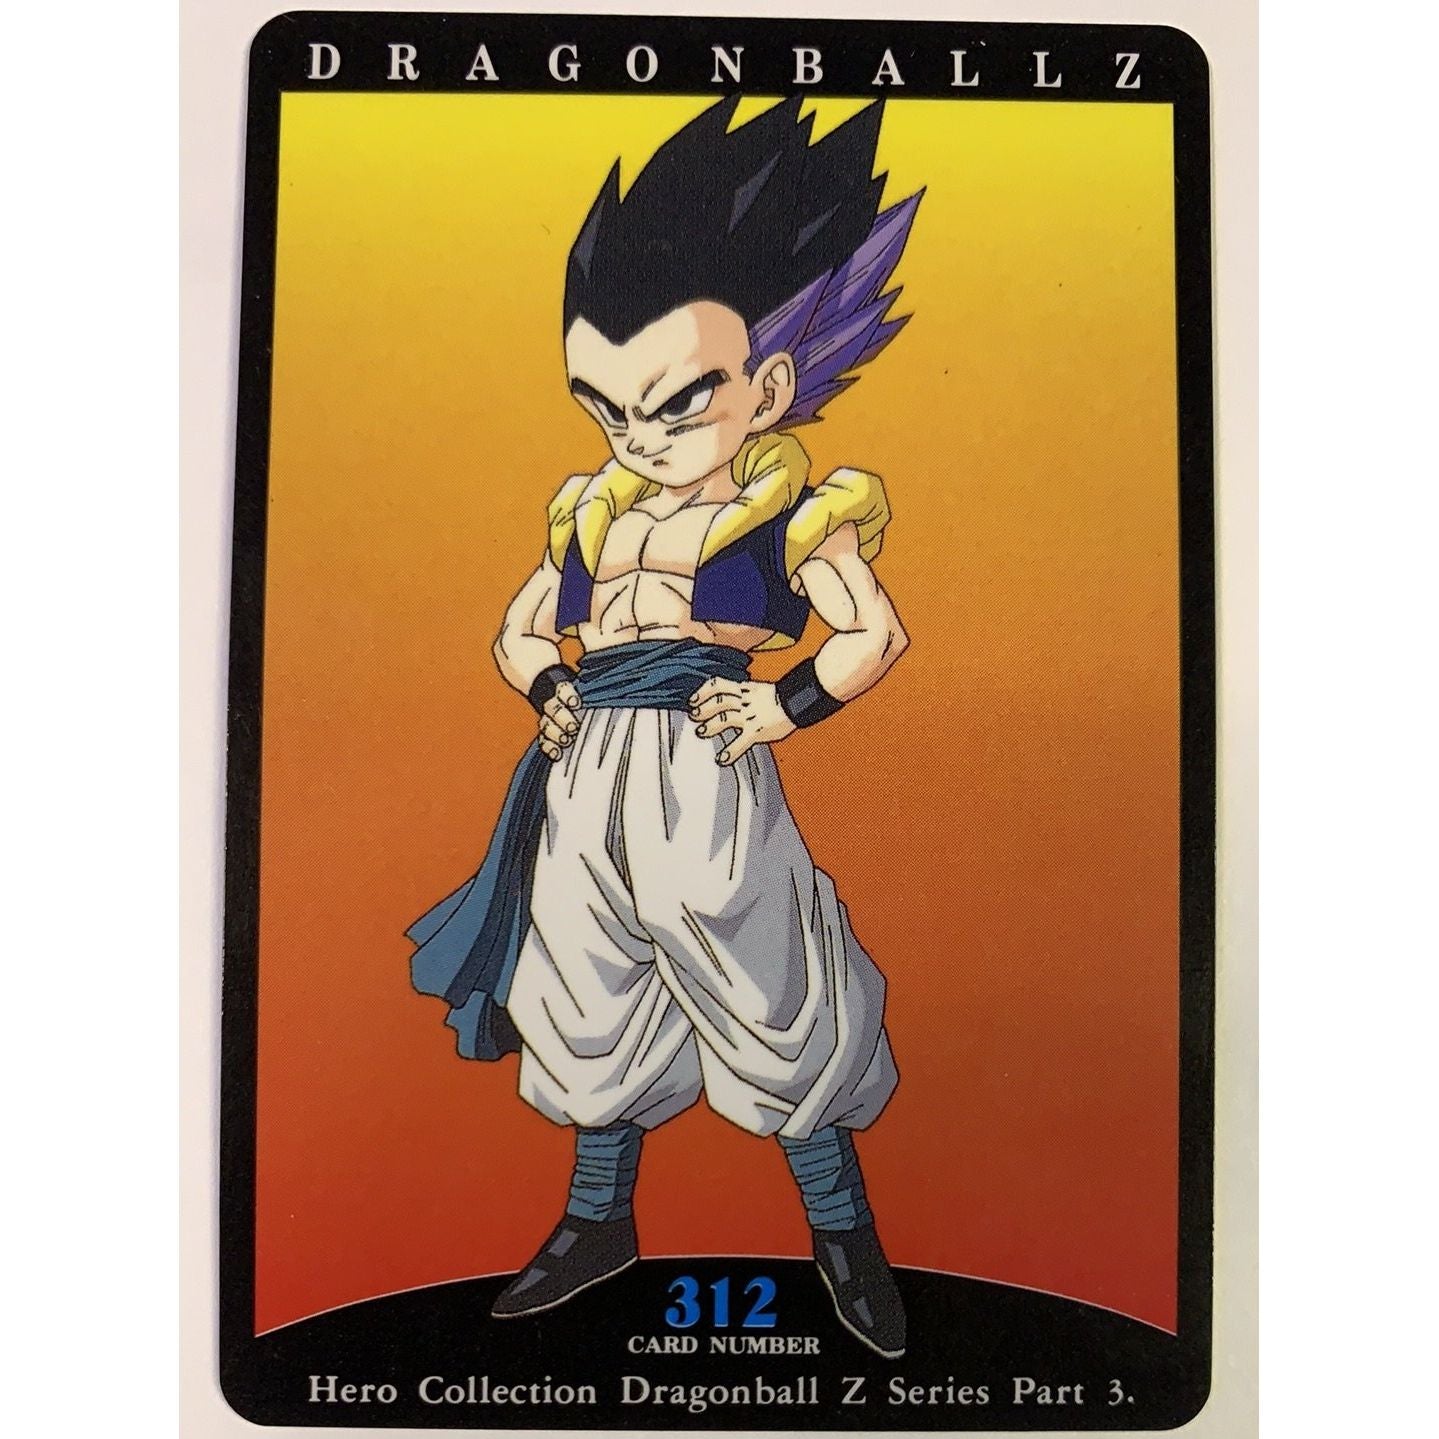  1995 Carte Dragon Ball Z Hero Collection #312  Local Legends Cards & Collectibles